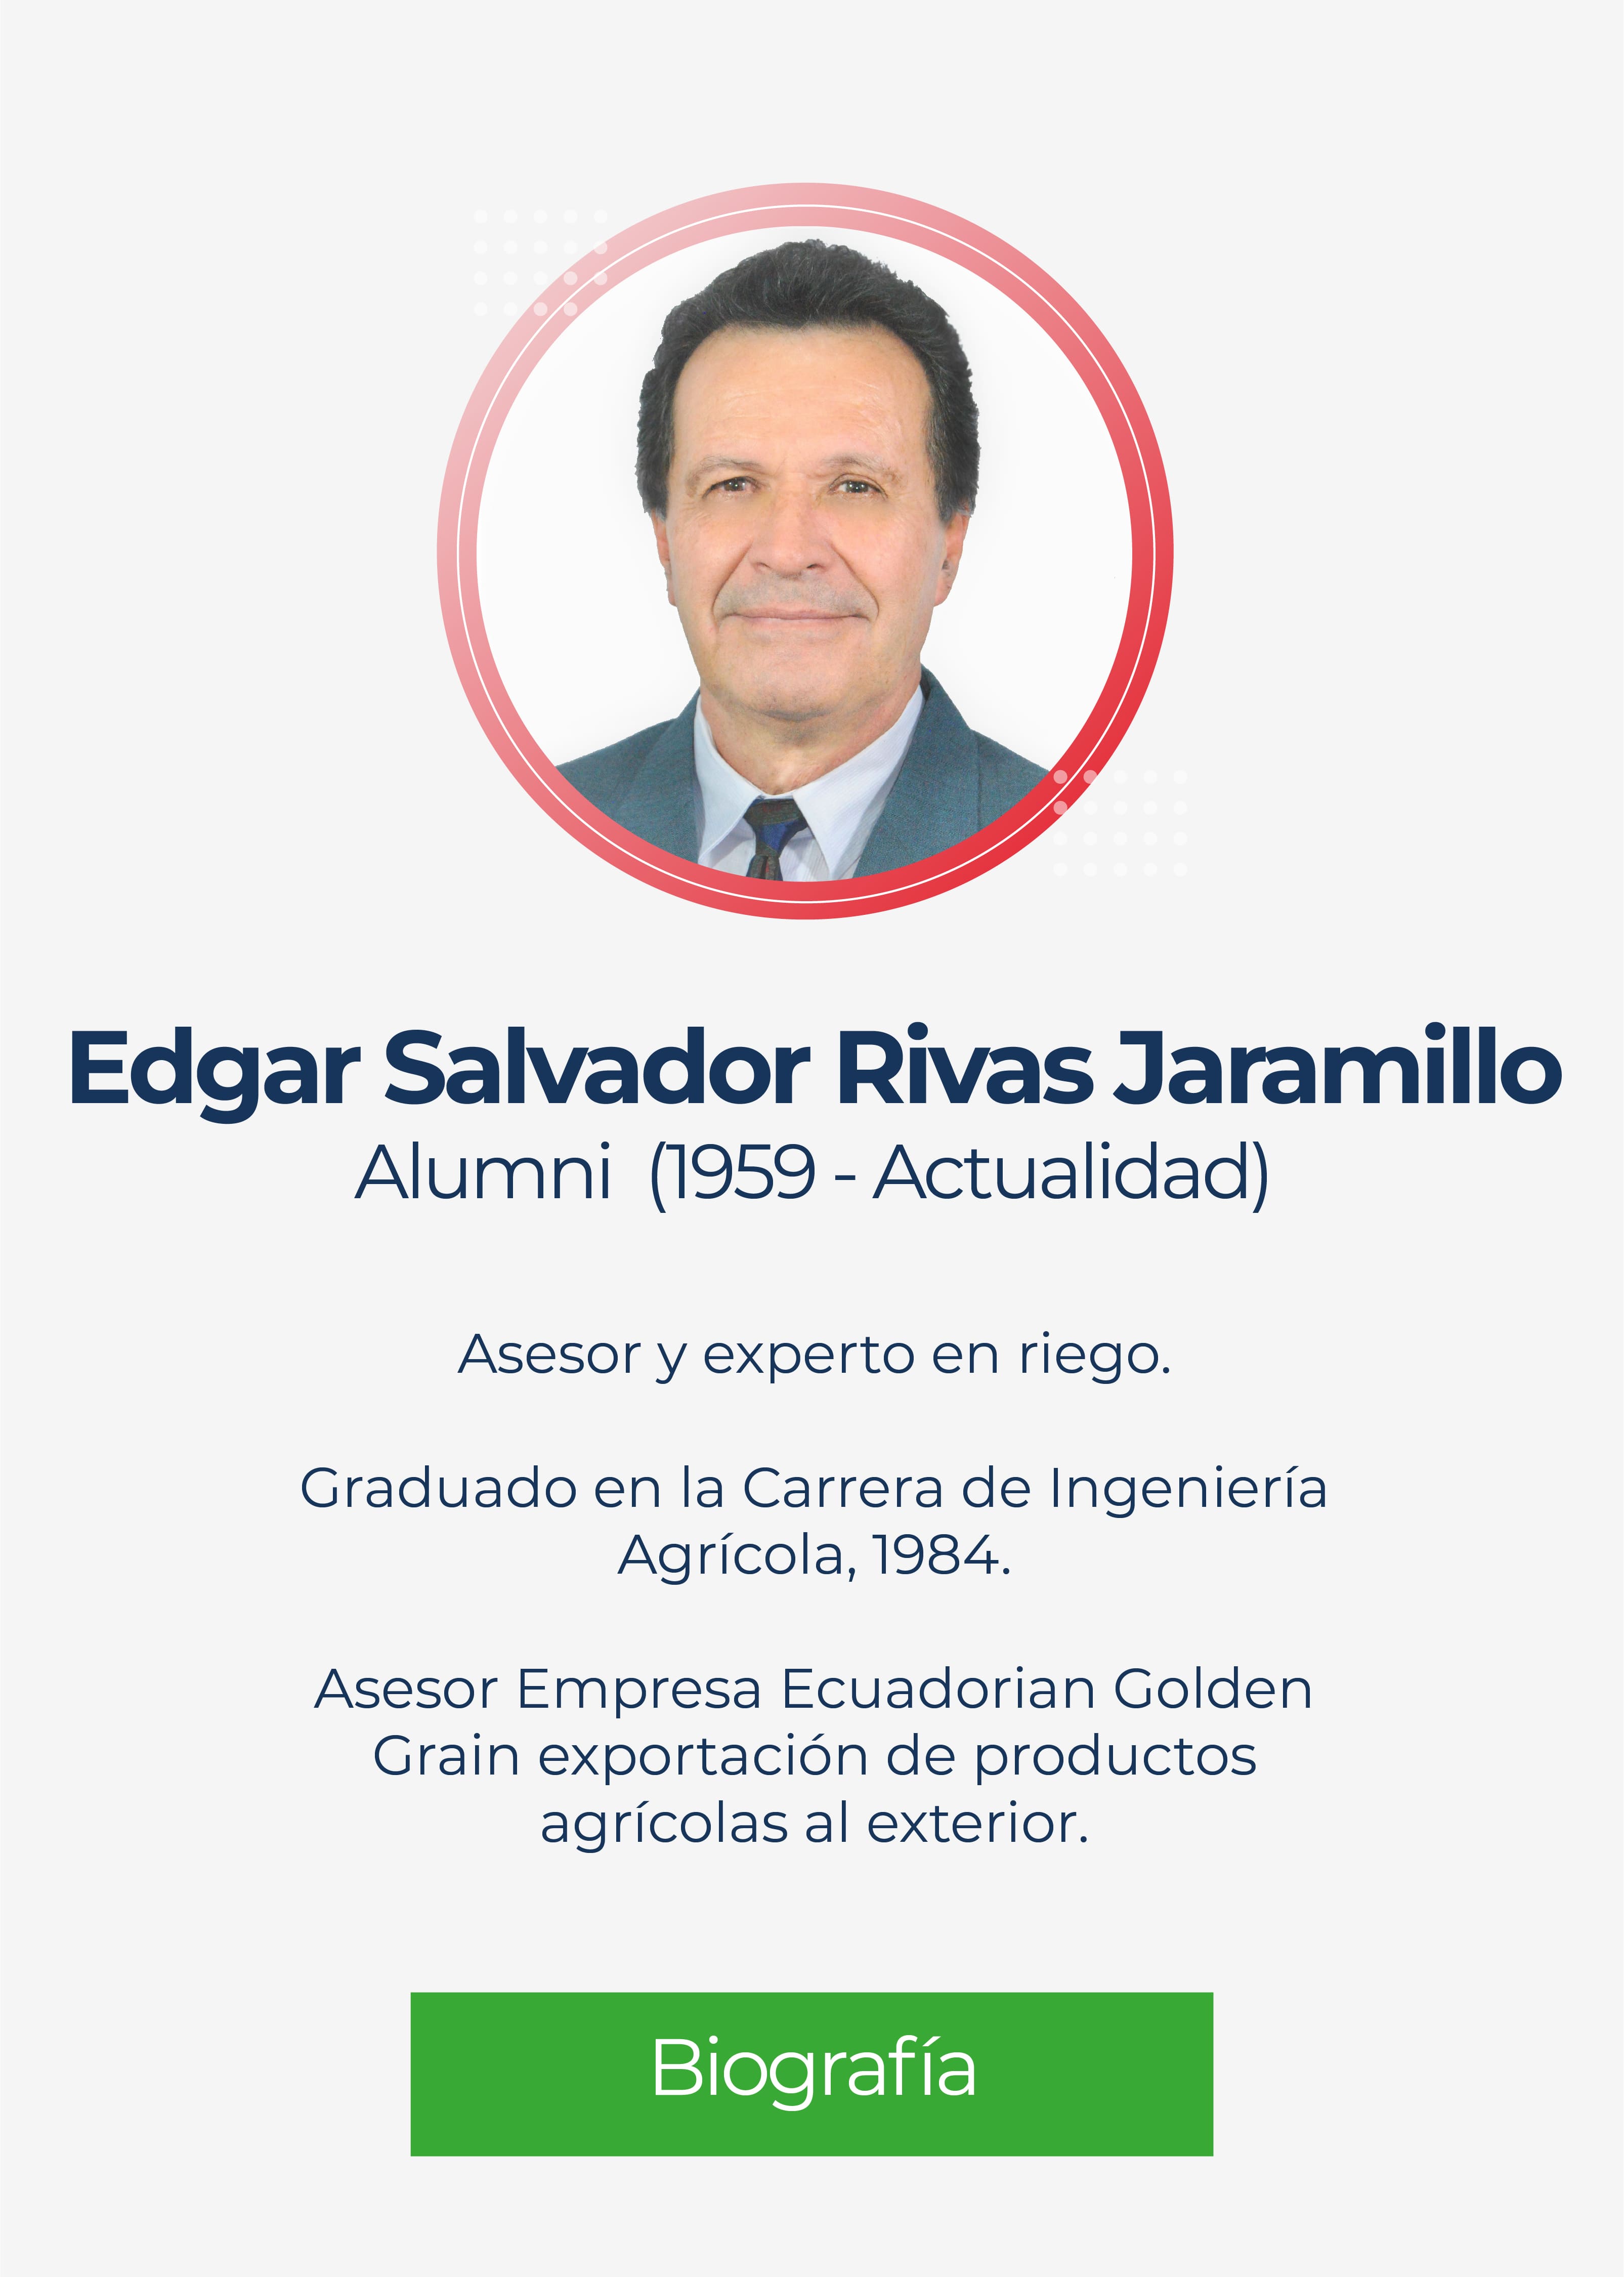 Edgar Salvador Rivas Jaramillo